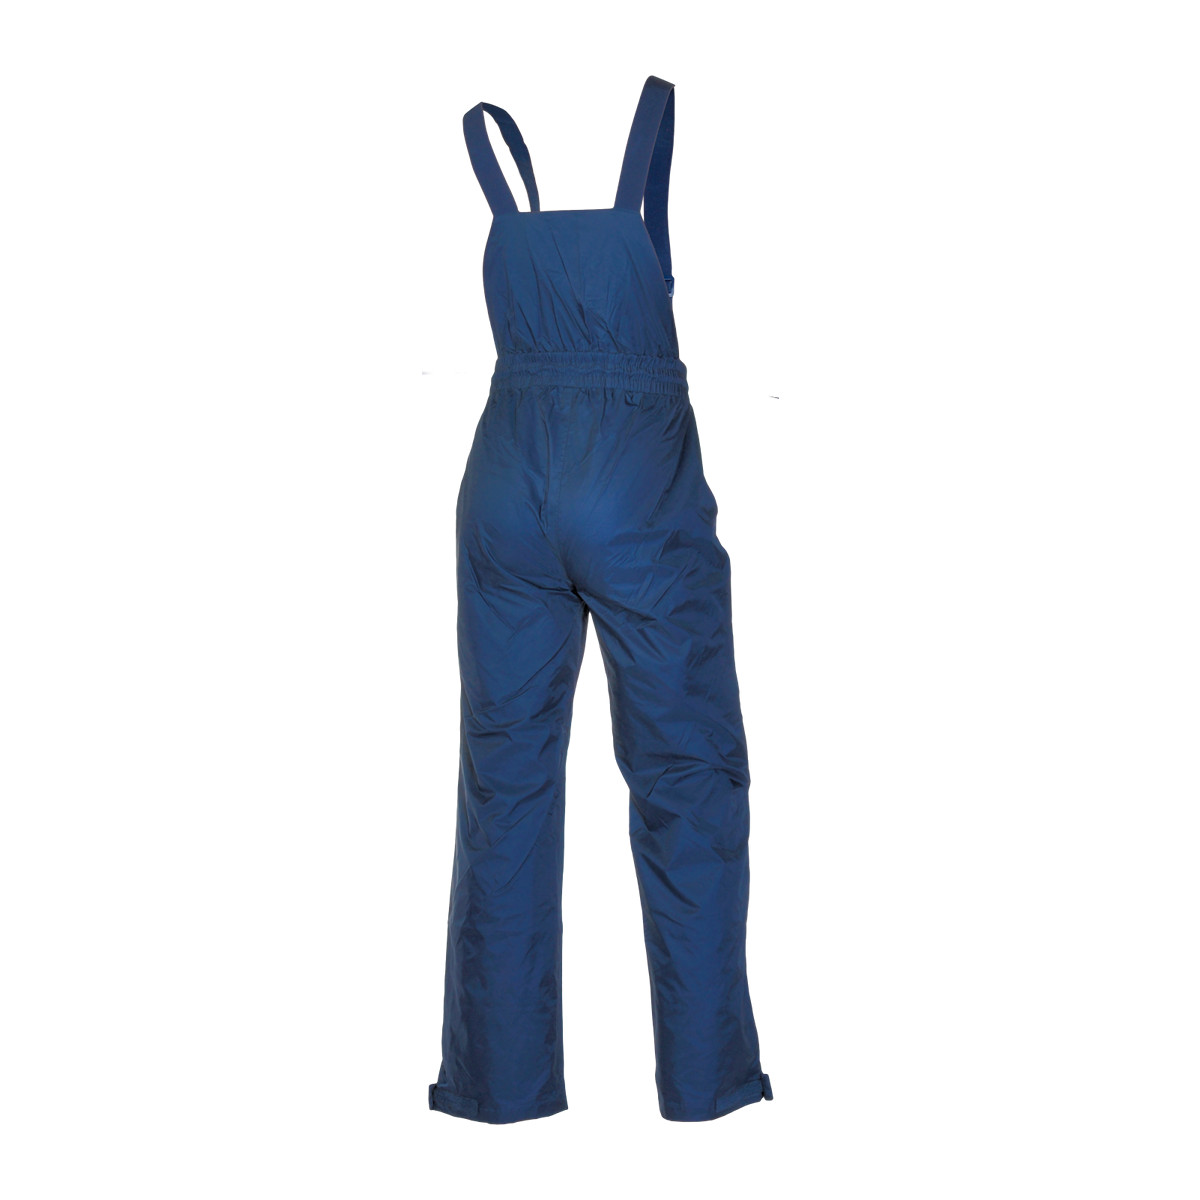 Dry Fashion Baltic Crew pantalon de voile unisexe bleu marine, taille S